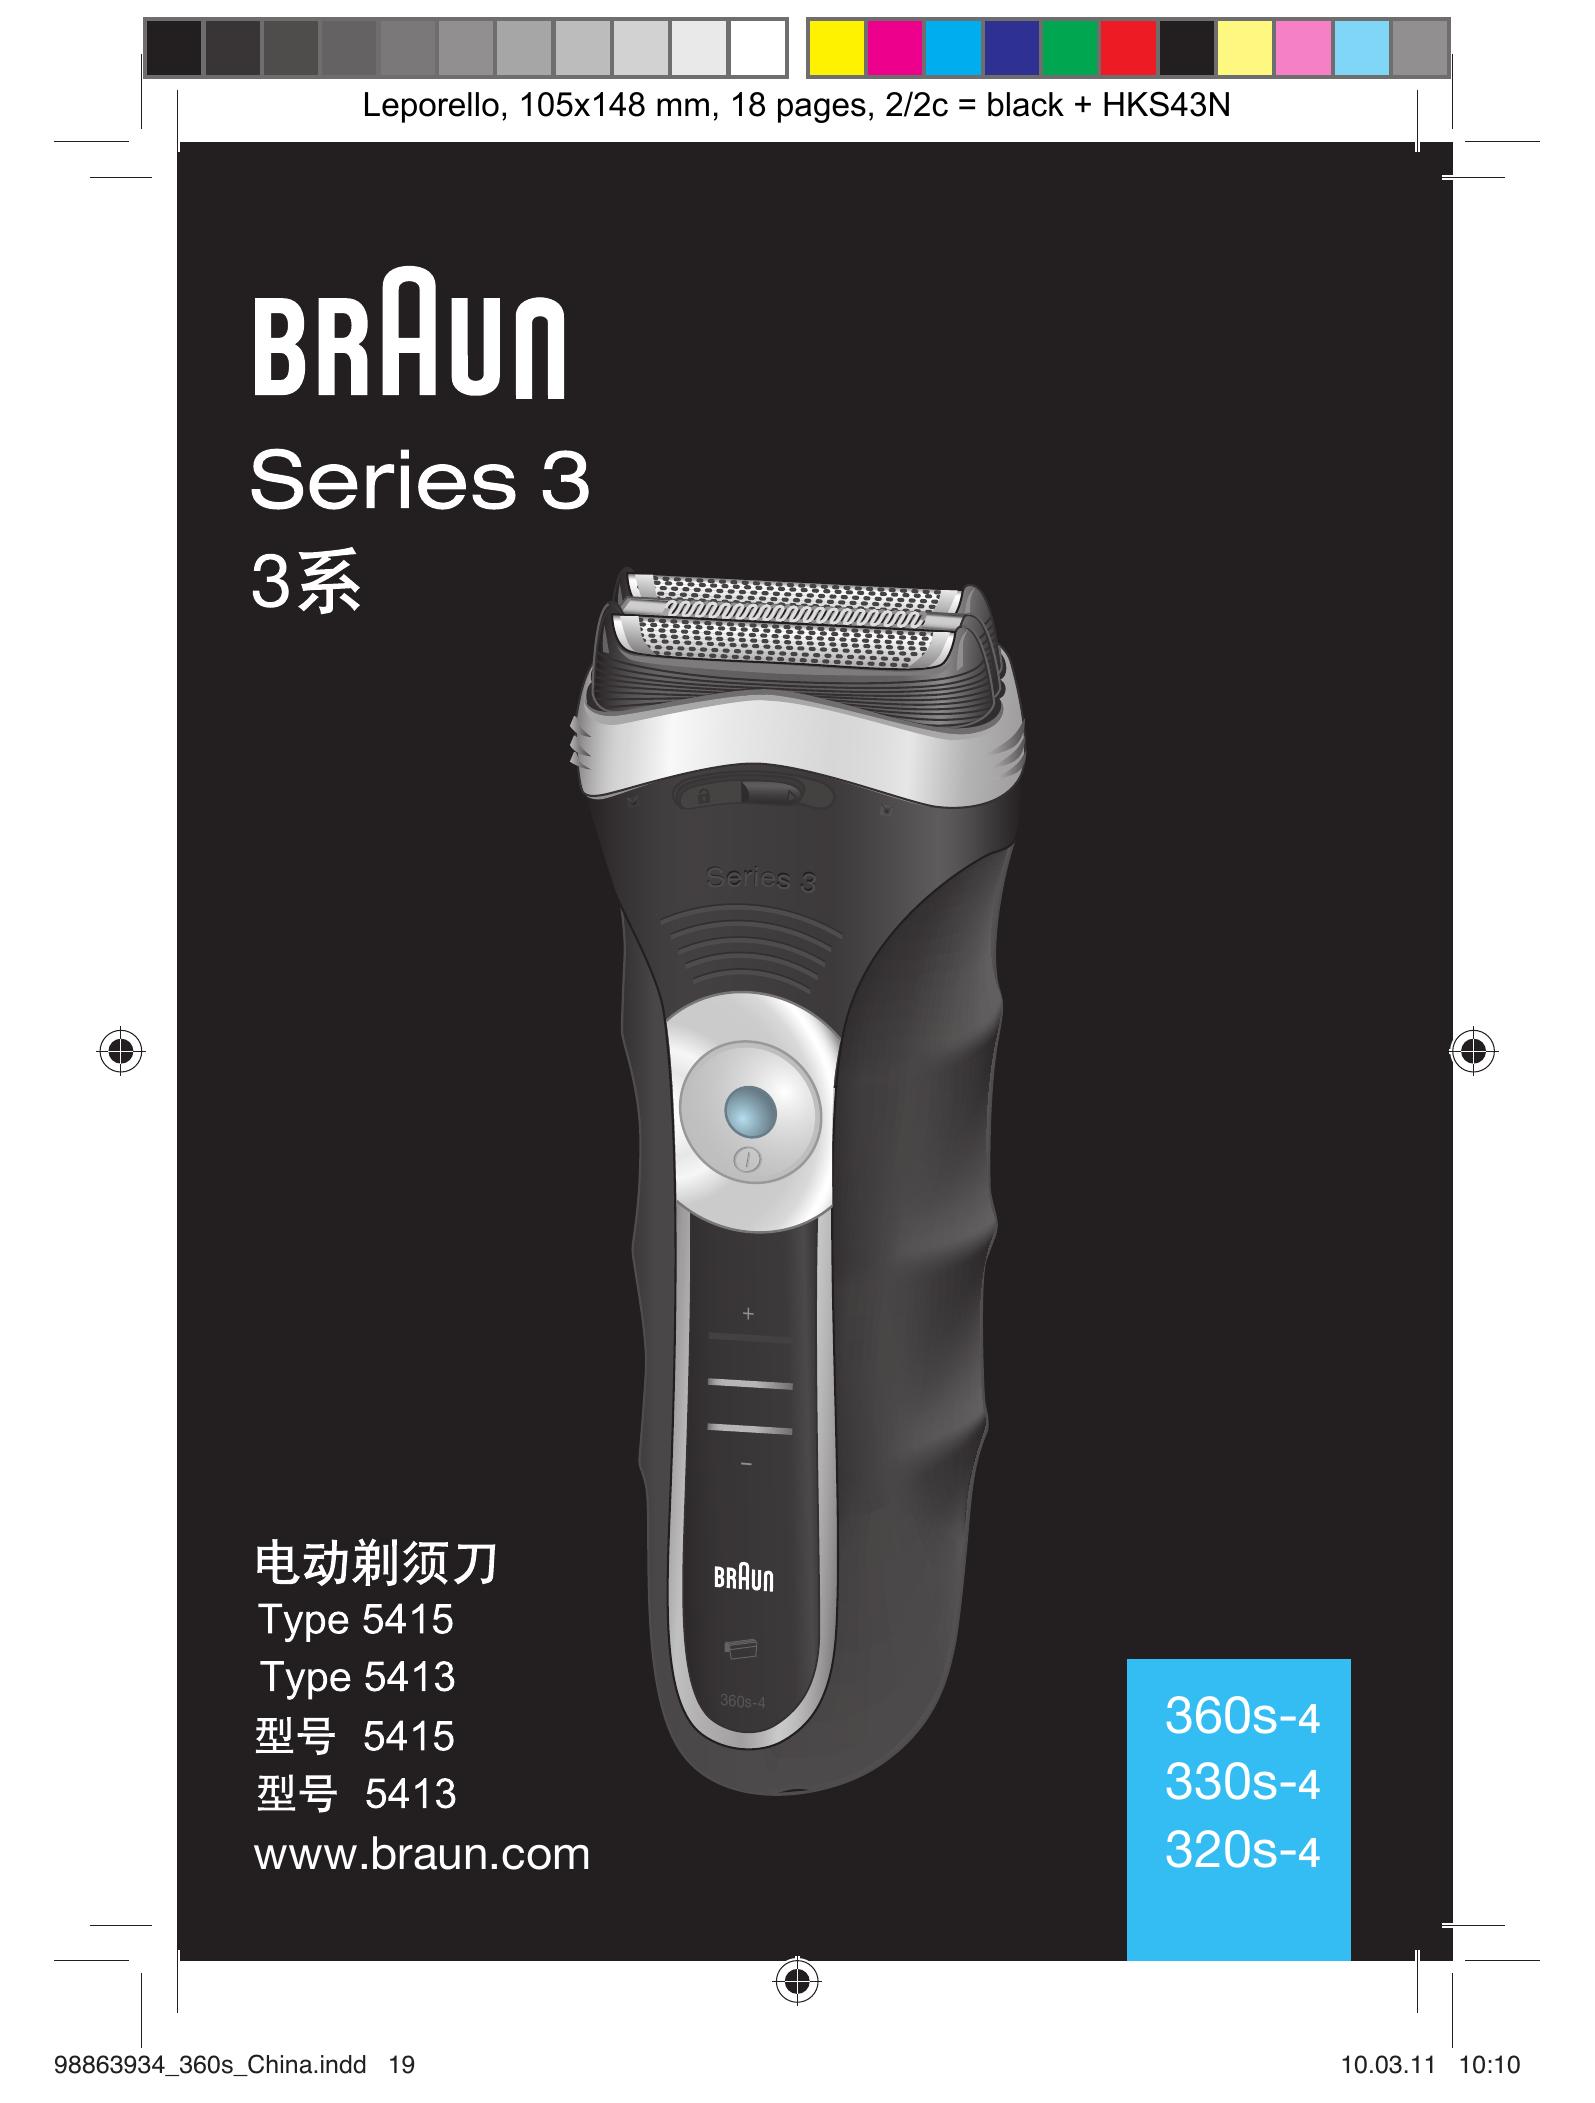 Braun 320S-4 Electric Shaver User Manual